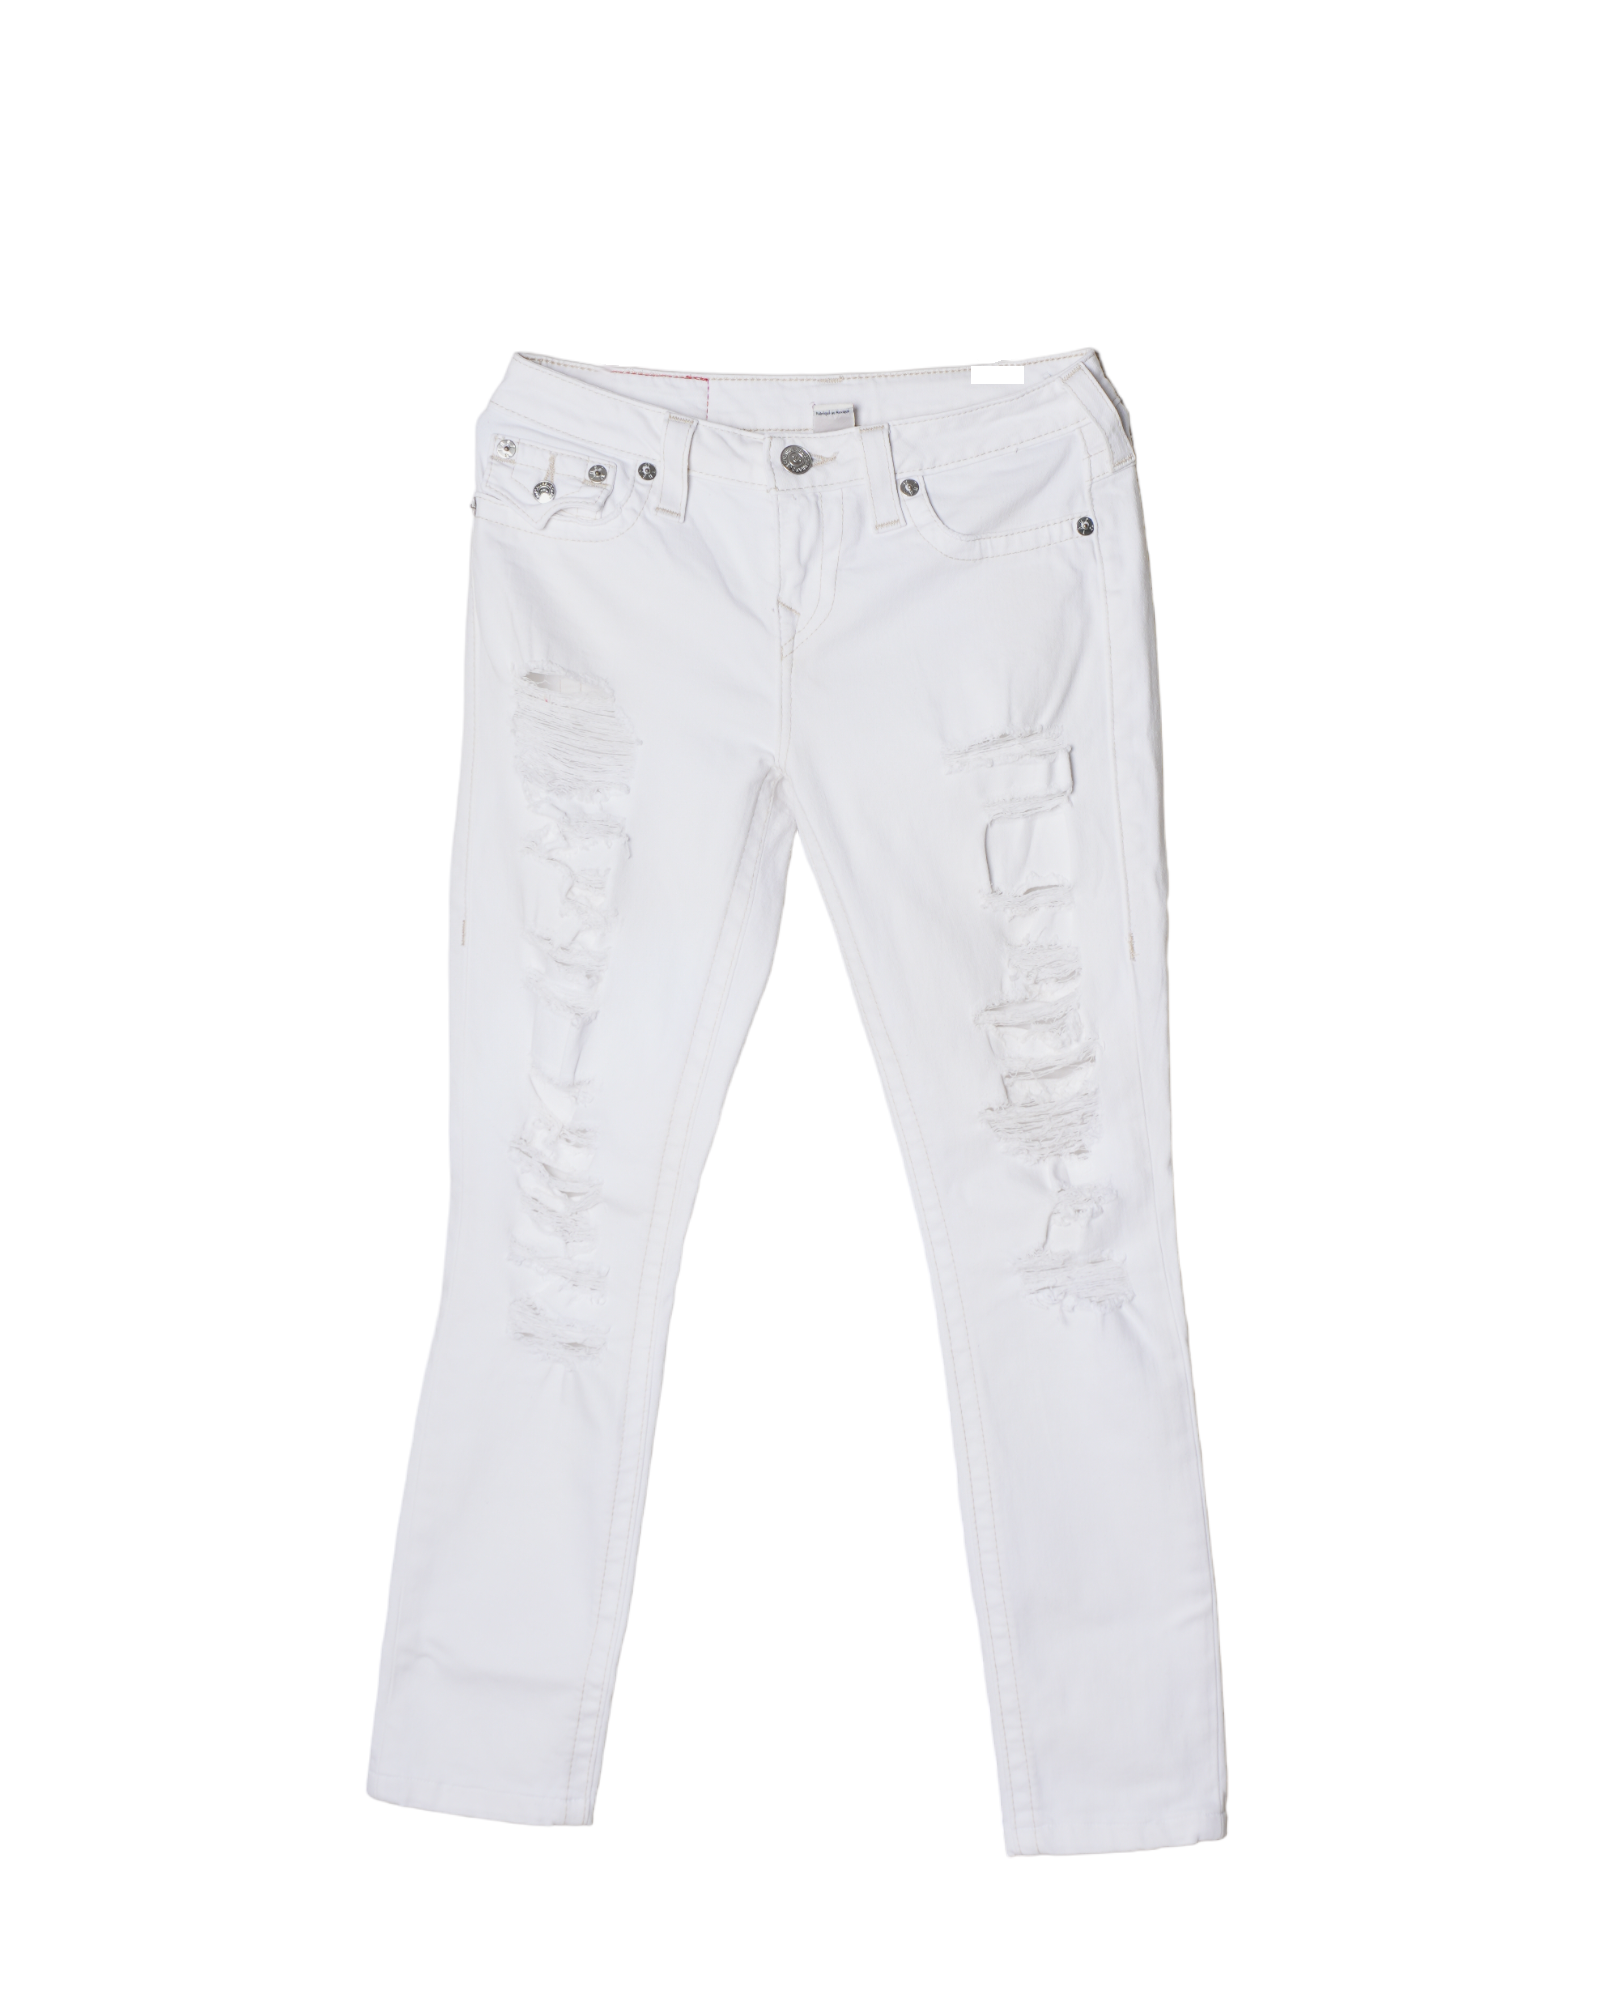 True Religion White Jeans